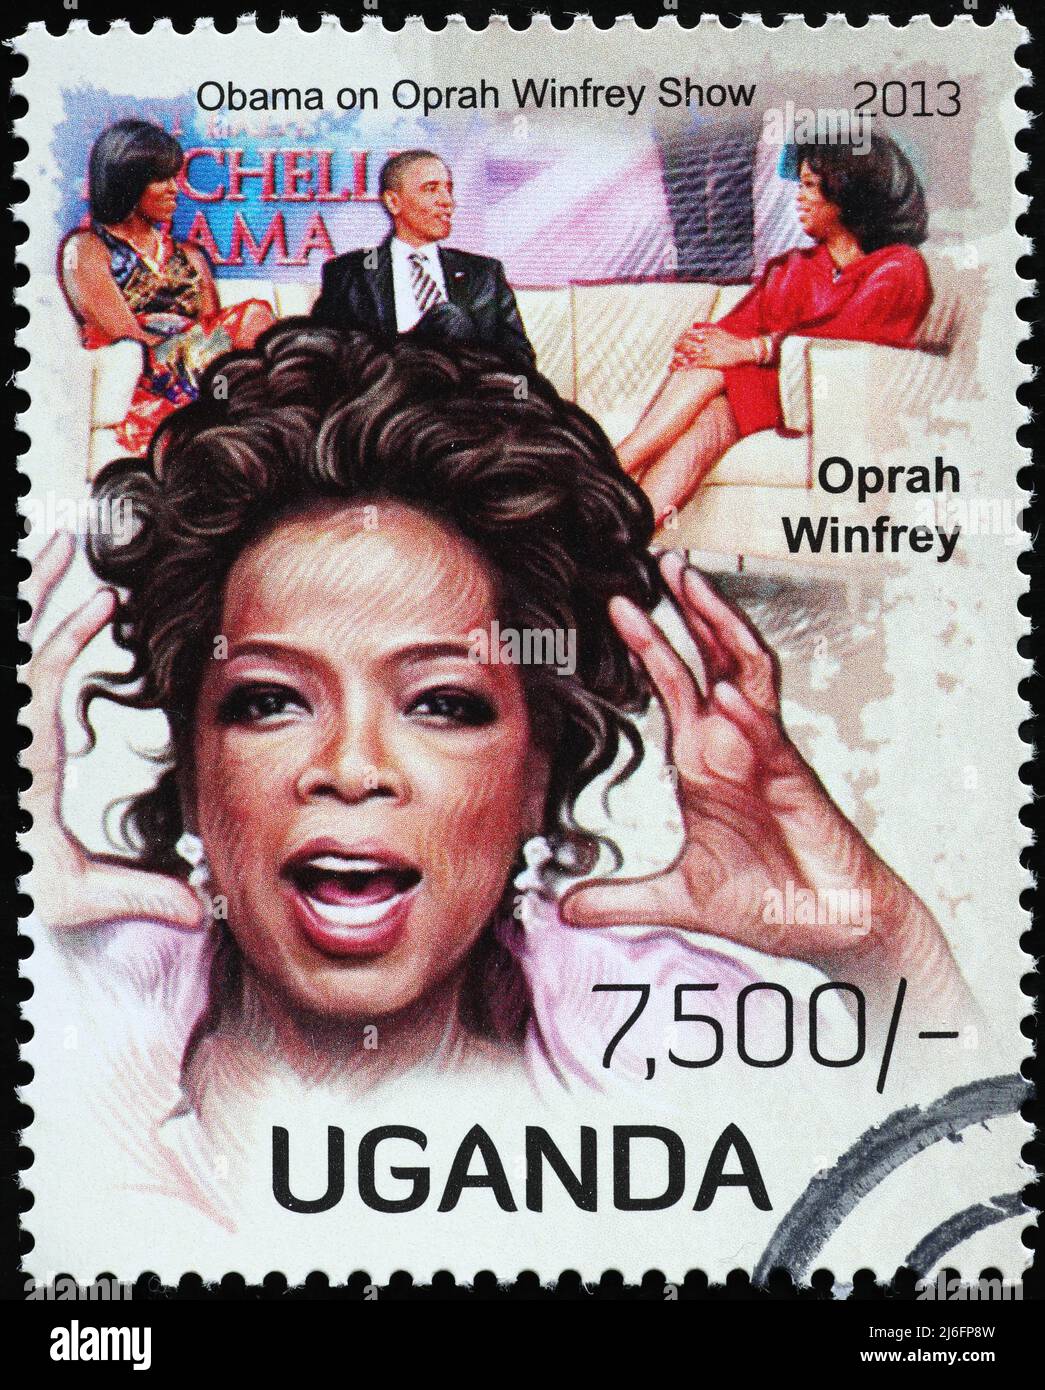 Oprah Winfrey portrait on postage stamp Stock Photo